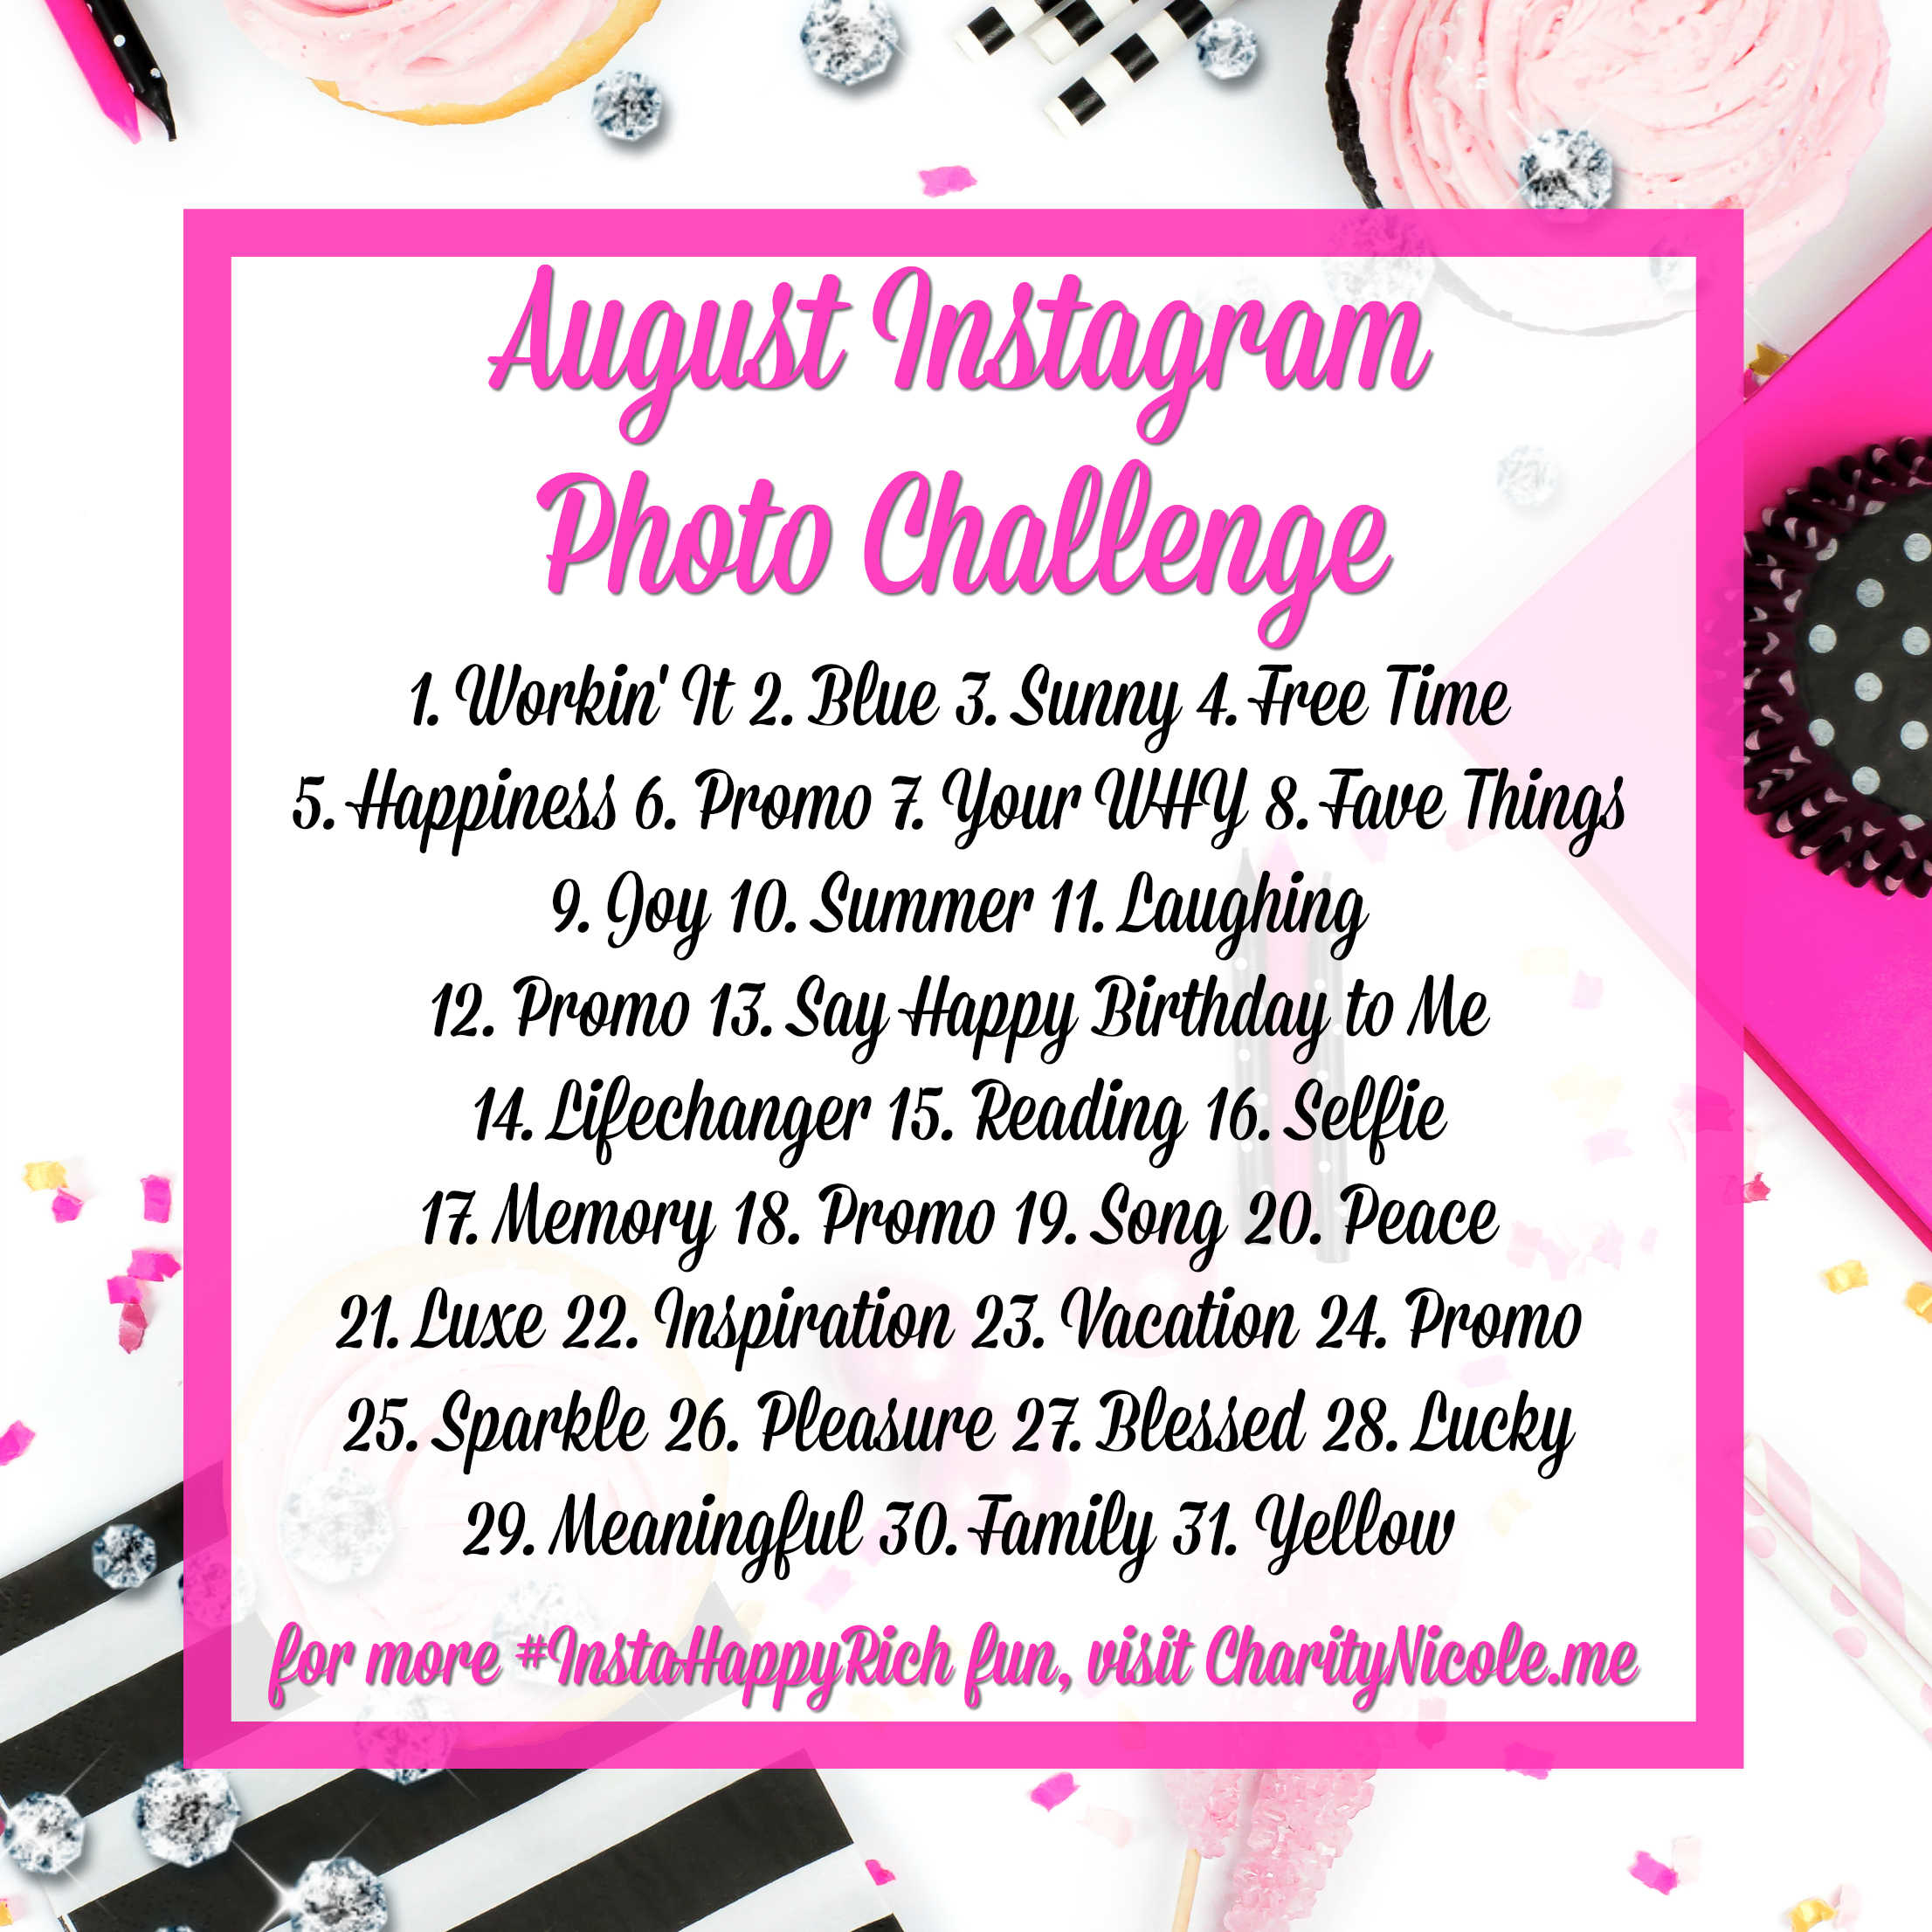 August Instagram Photo Challenge - Charity Nicole ...